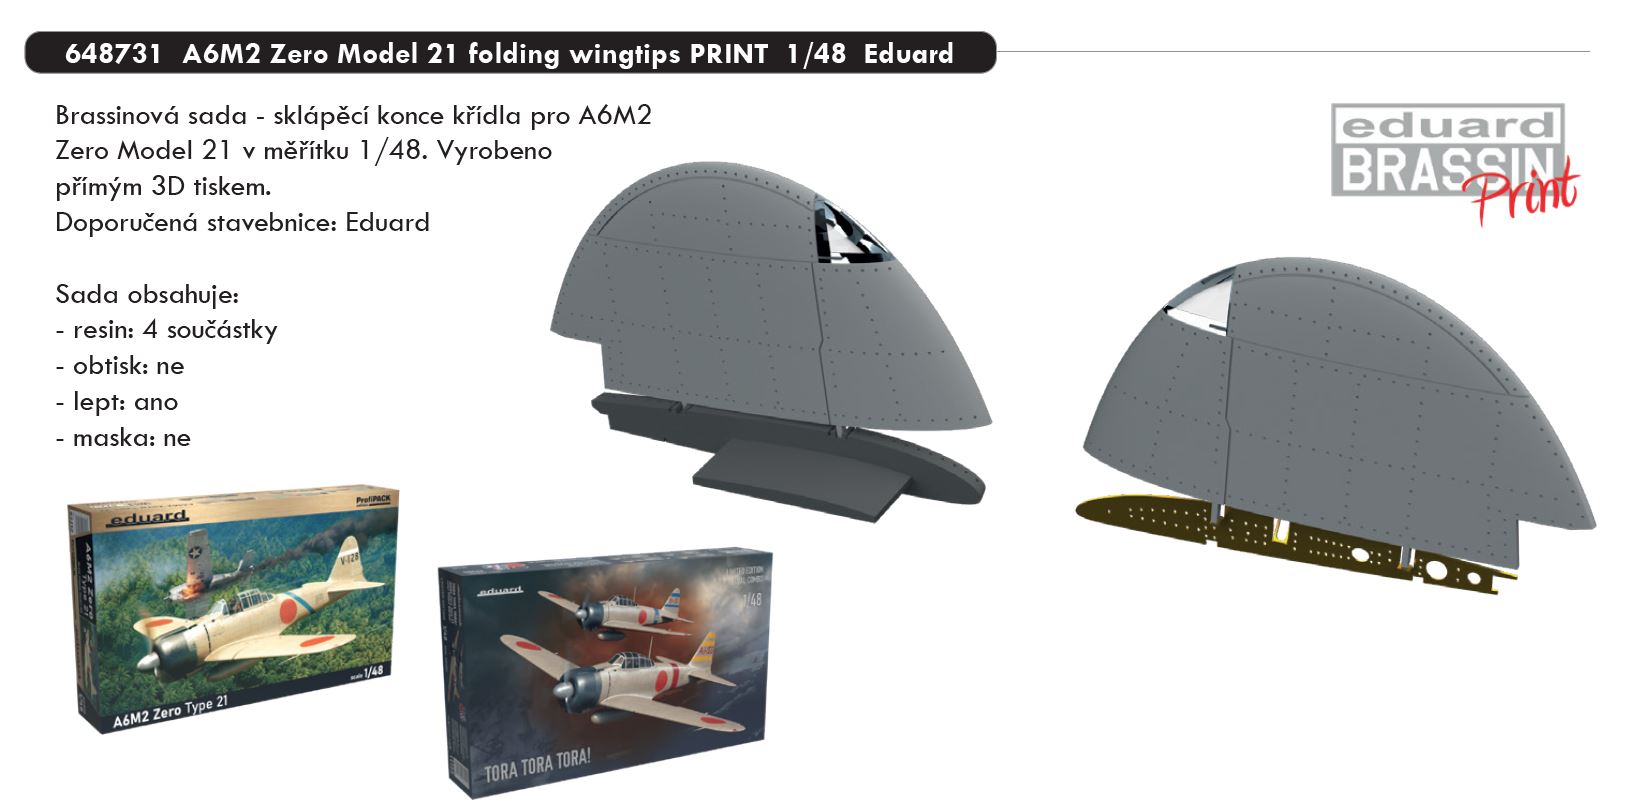 1/48 A6M2 Zero Model 21 folding wingtips PRINT (EDUARD)